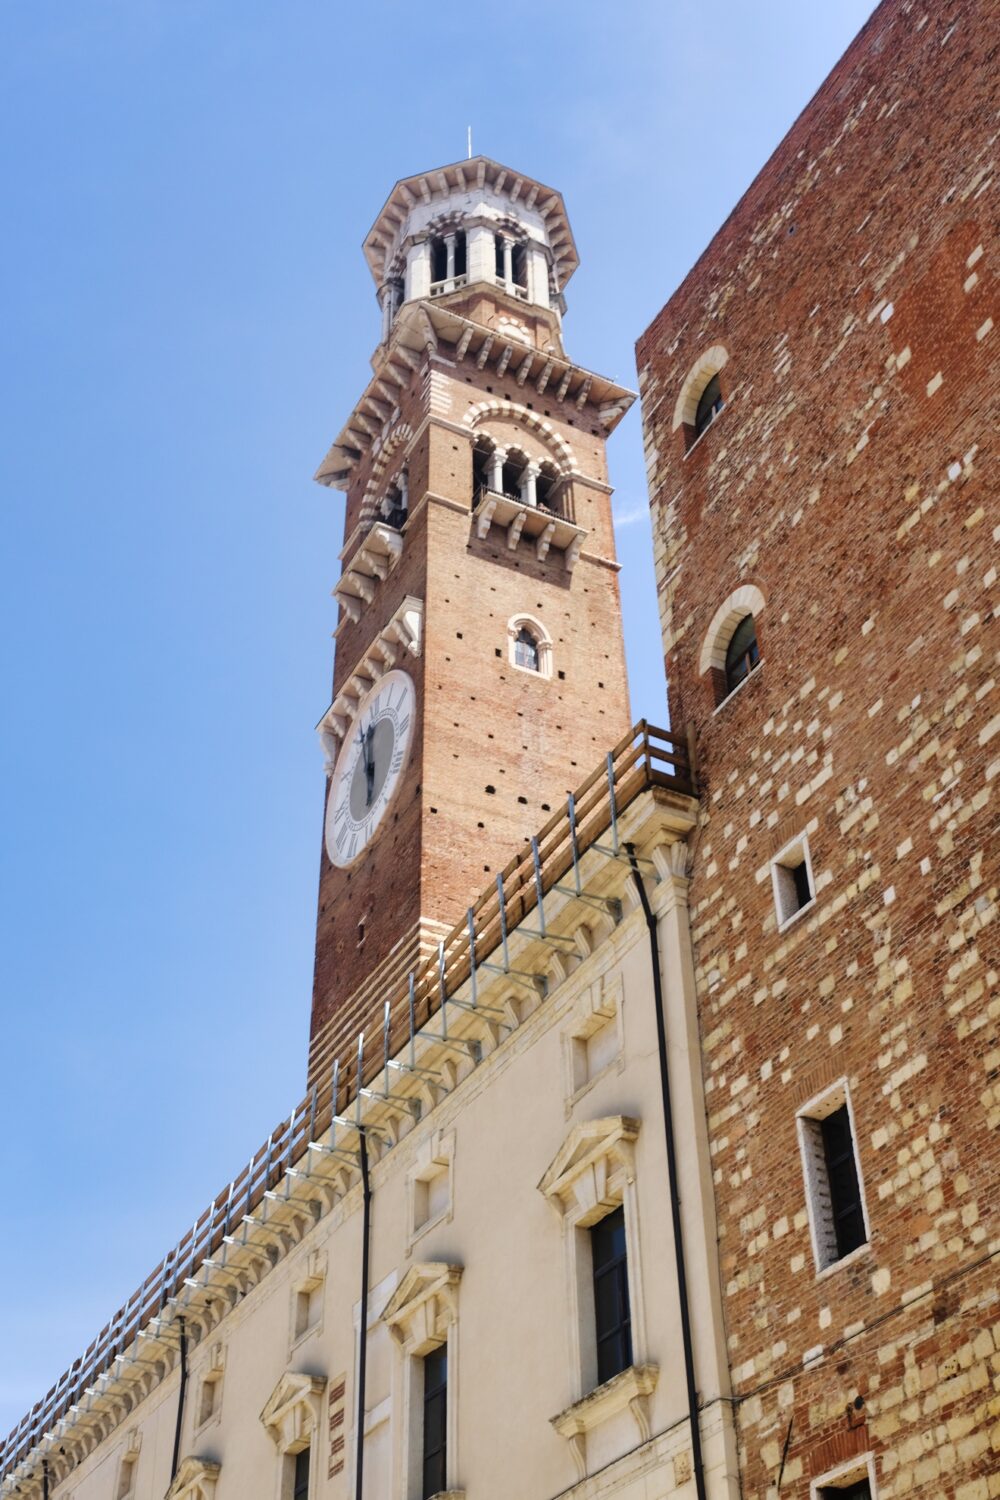 Verona tower